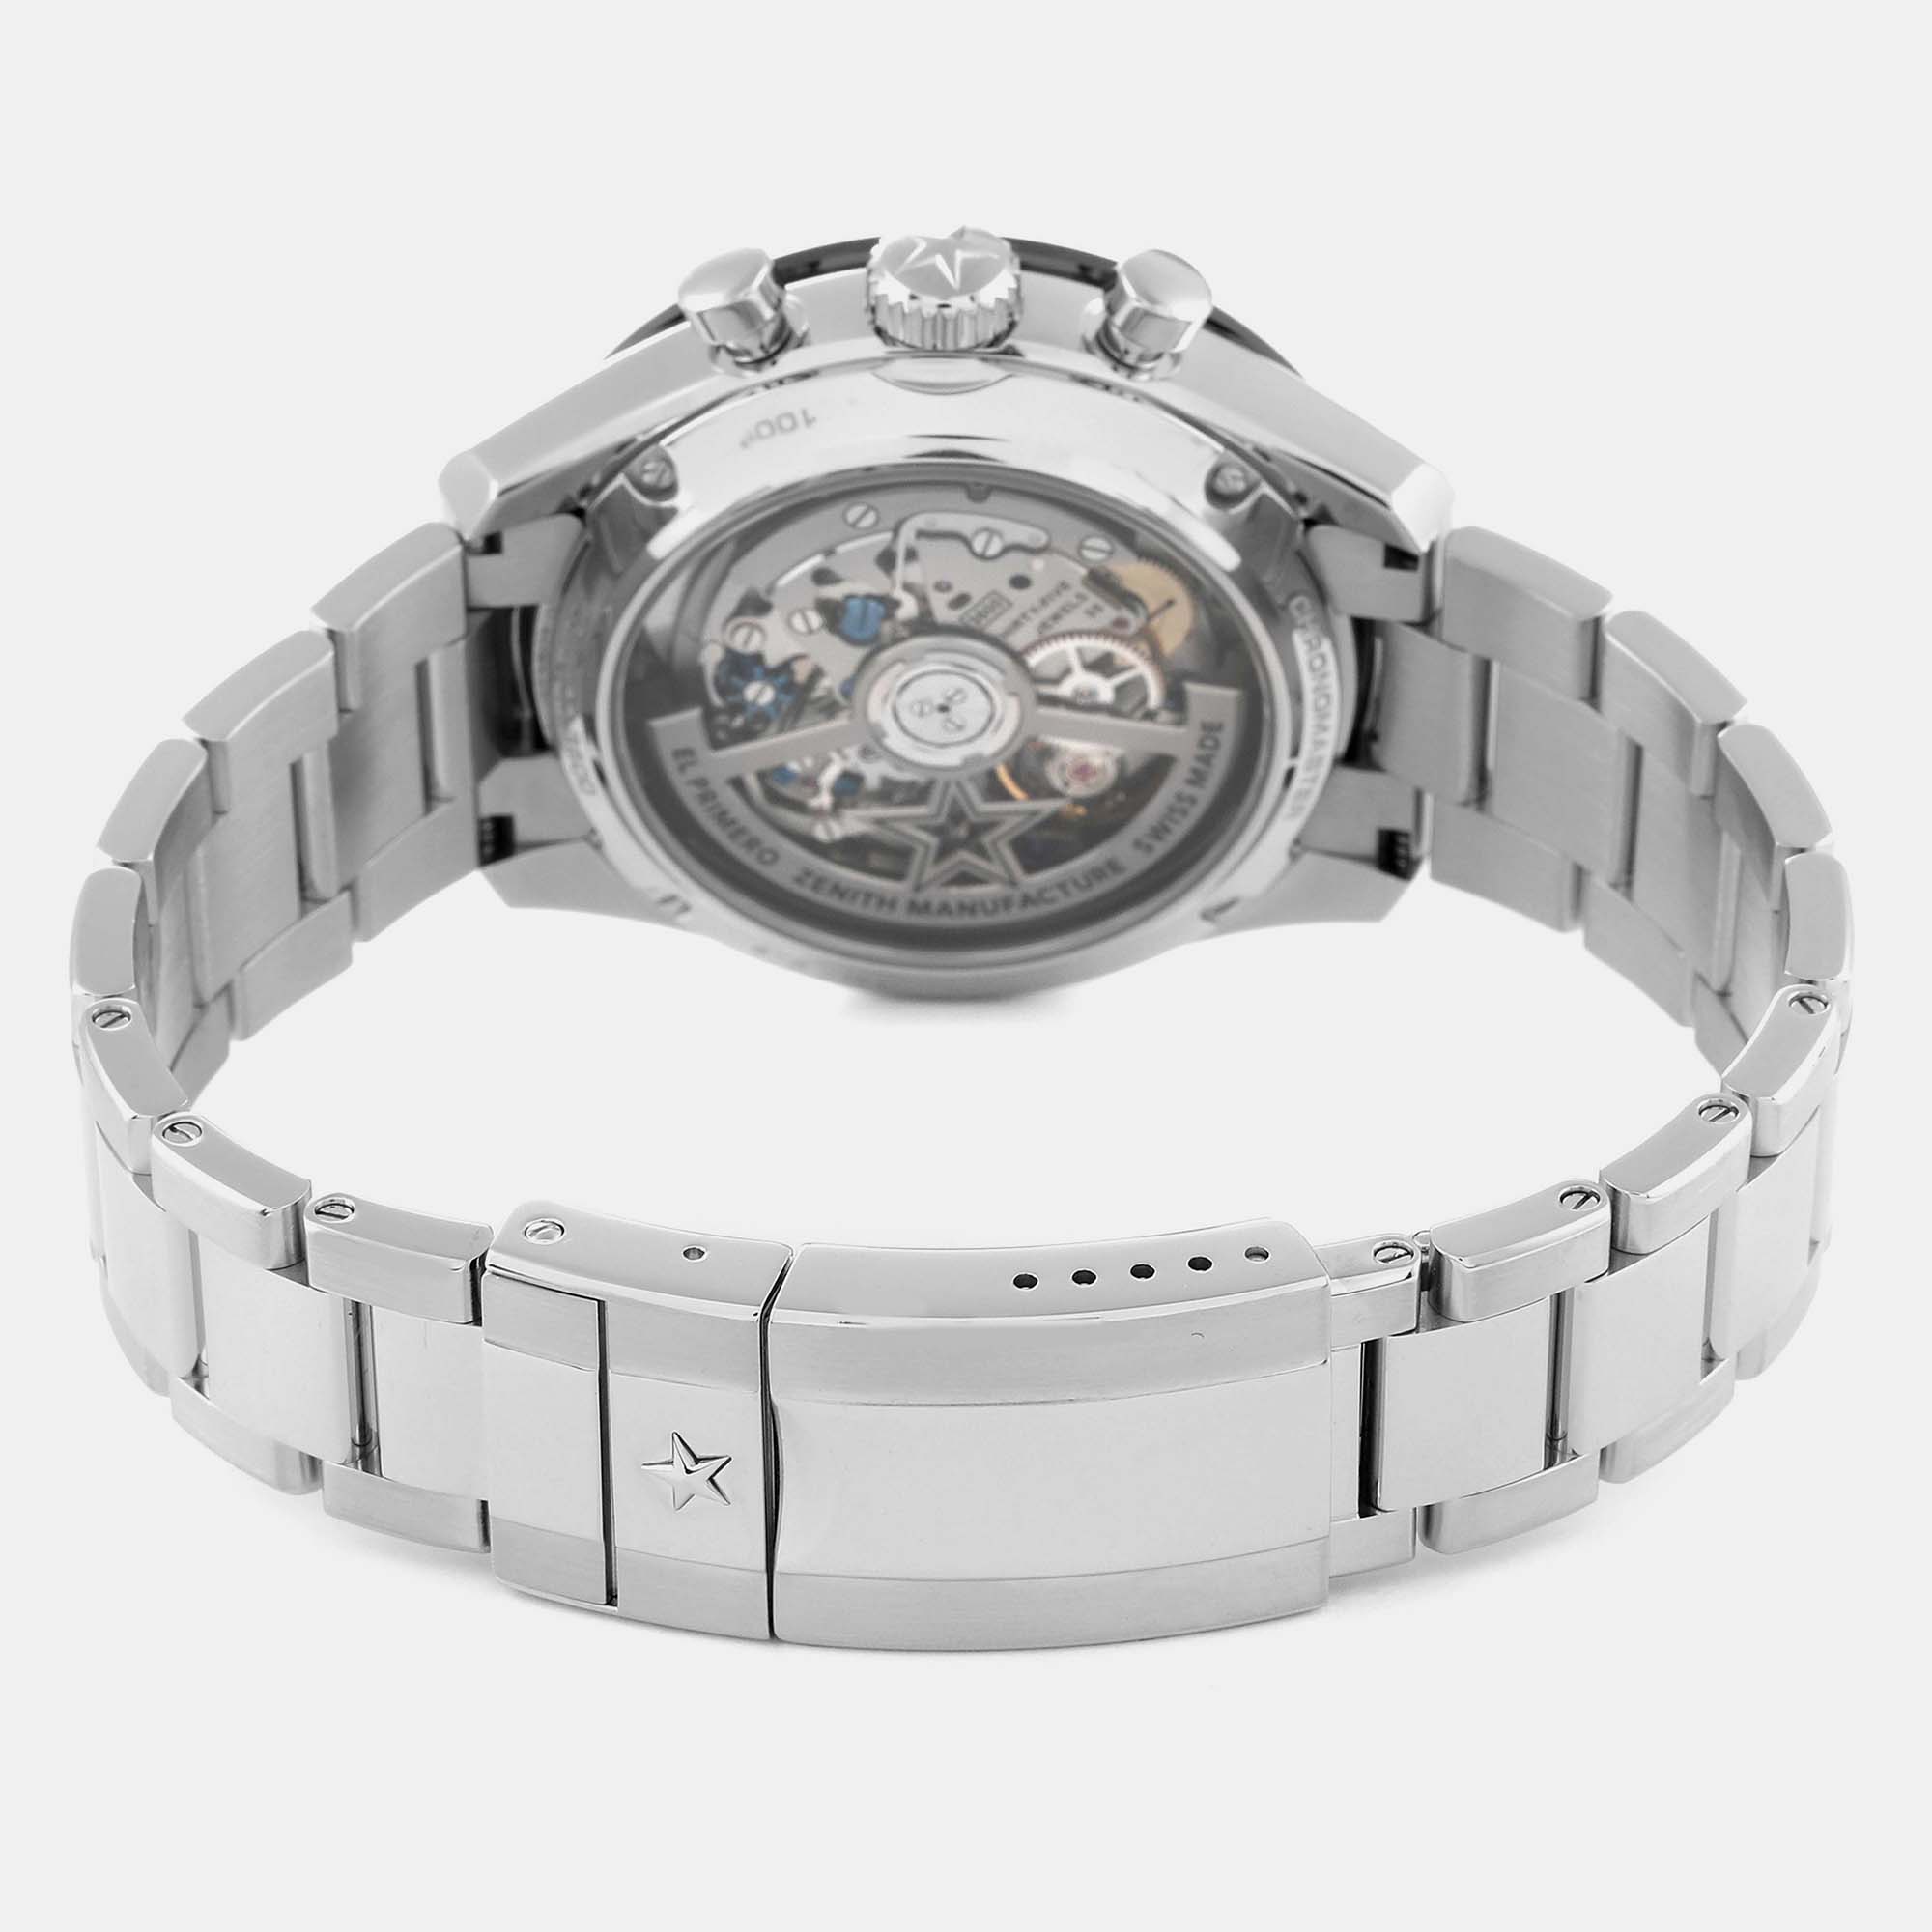 Zenith Black Stainless Steel El Primero  03.3100.3600 Automatic Chronograph Men's Wristwatch 41 Mm